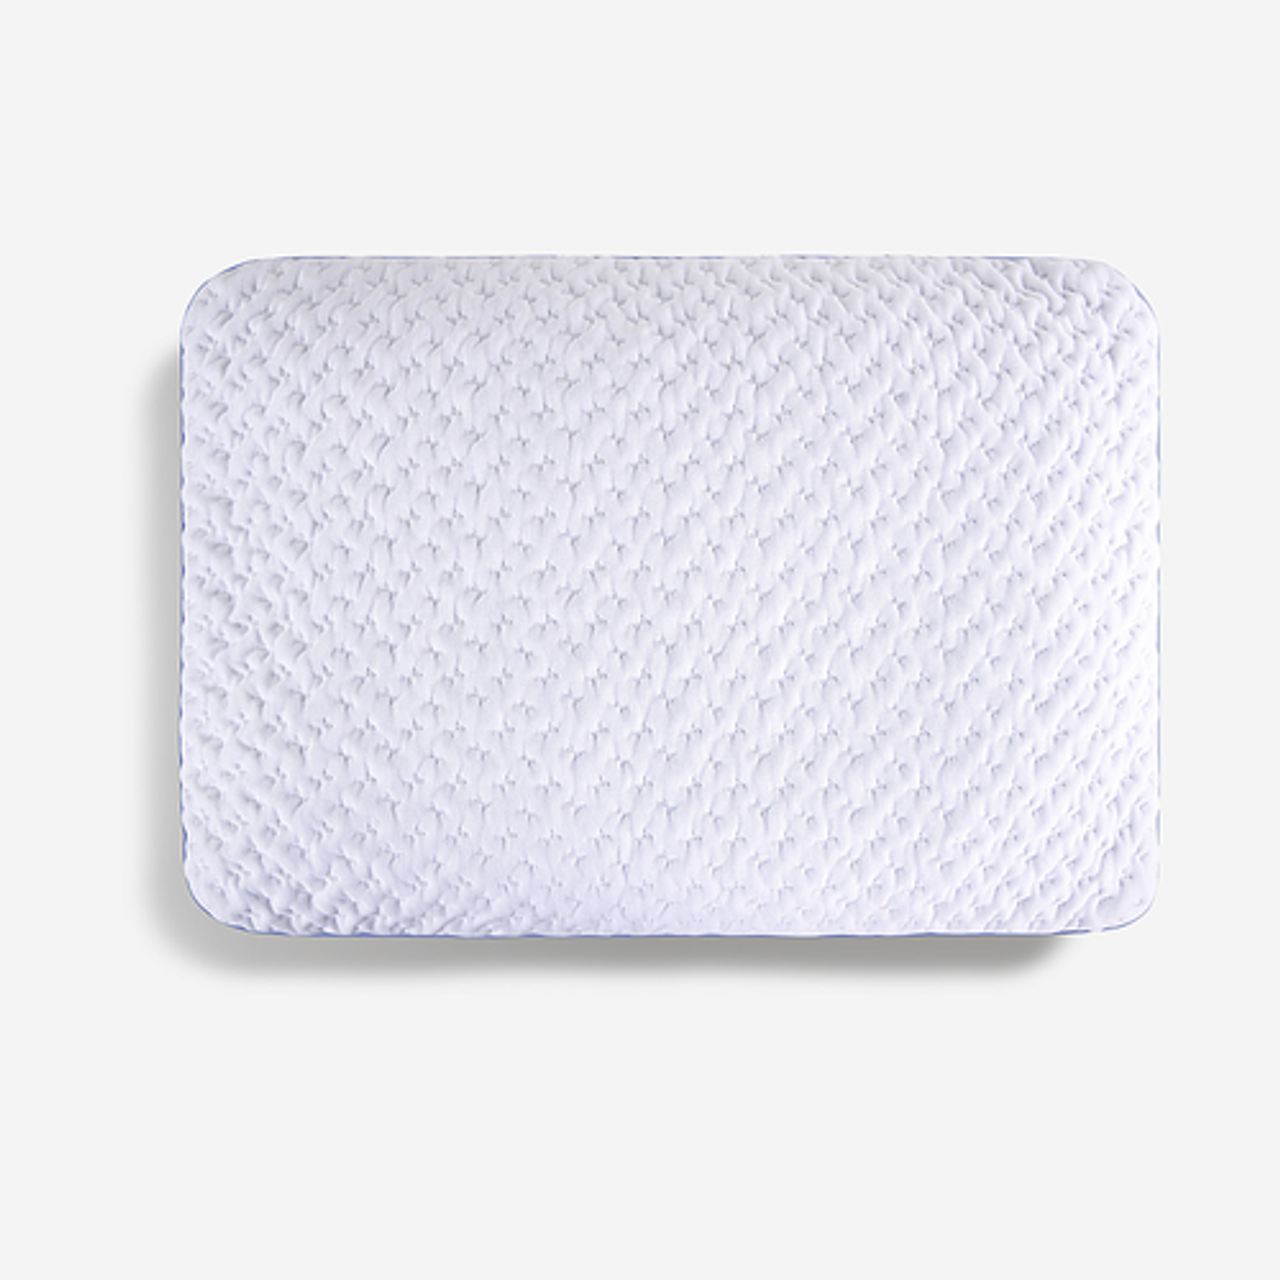 Bedgear - Balance Performance Pillow 2.0 - White